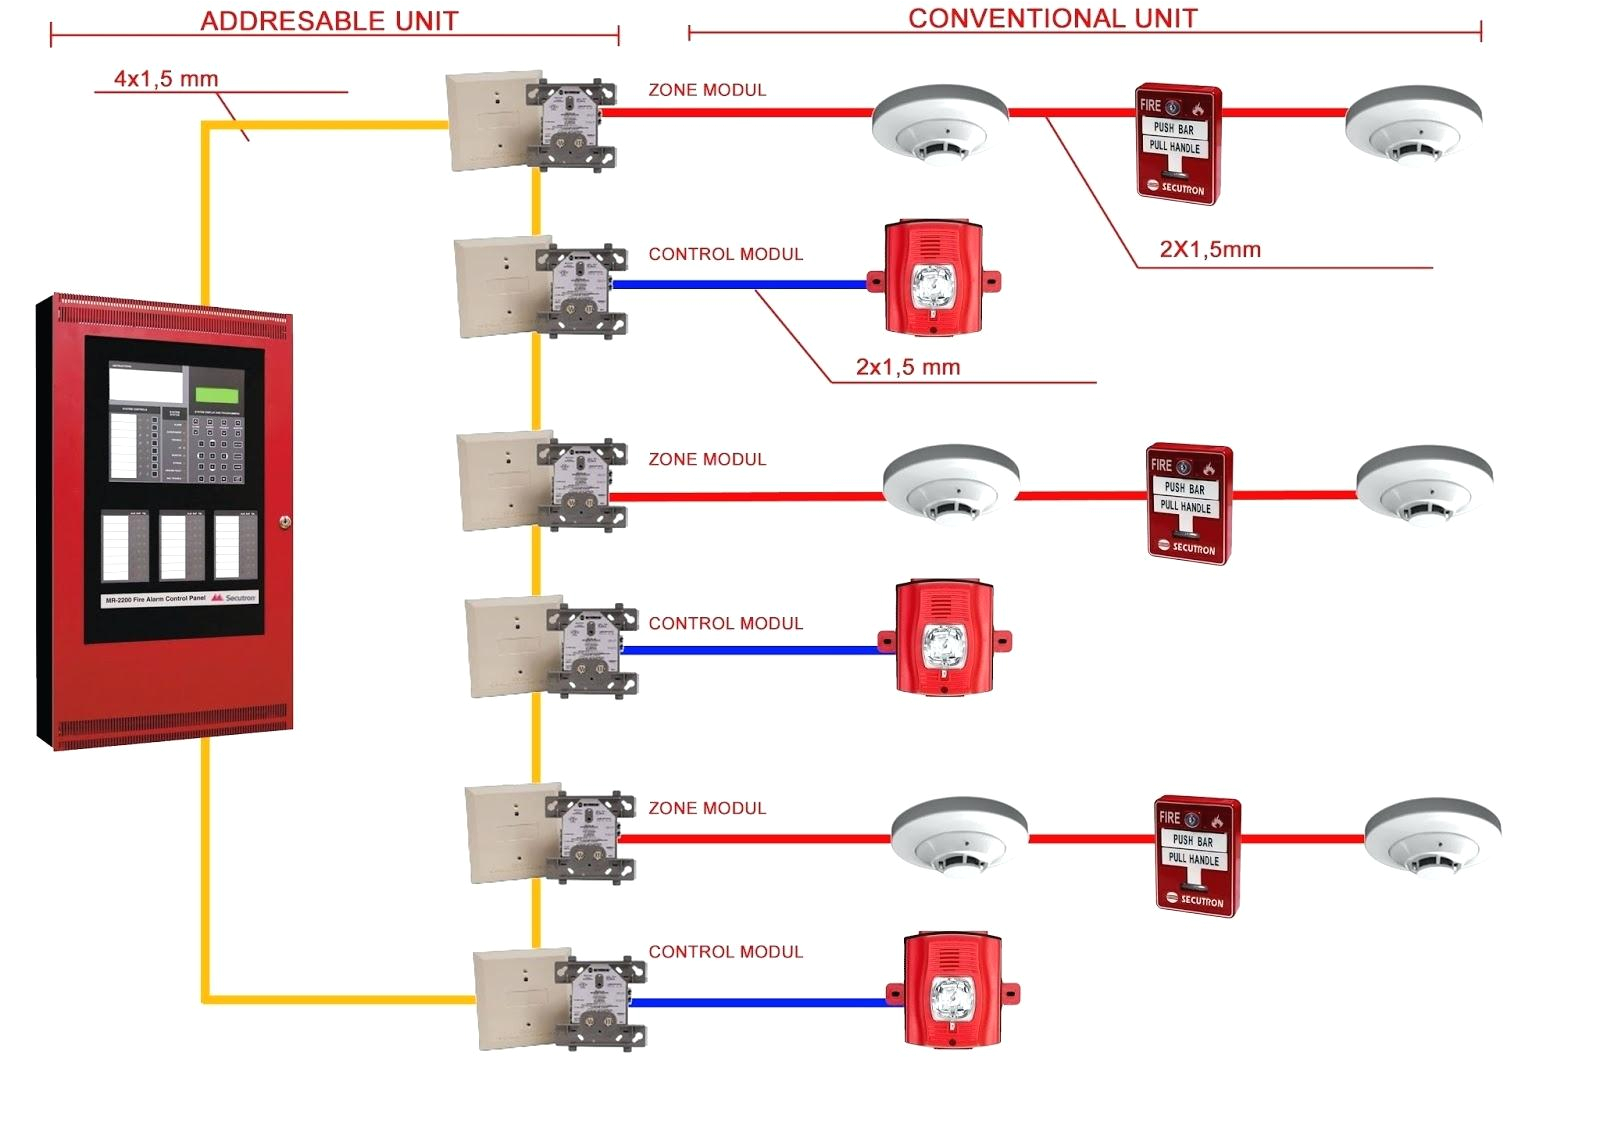 Fire Alarm Smoke Detector Wiring Diagram Fire Alarm Smoke Detector Wiring Diagram Sample